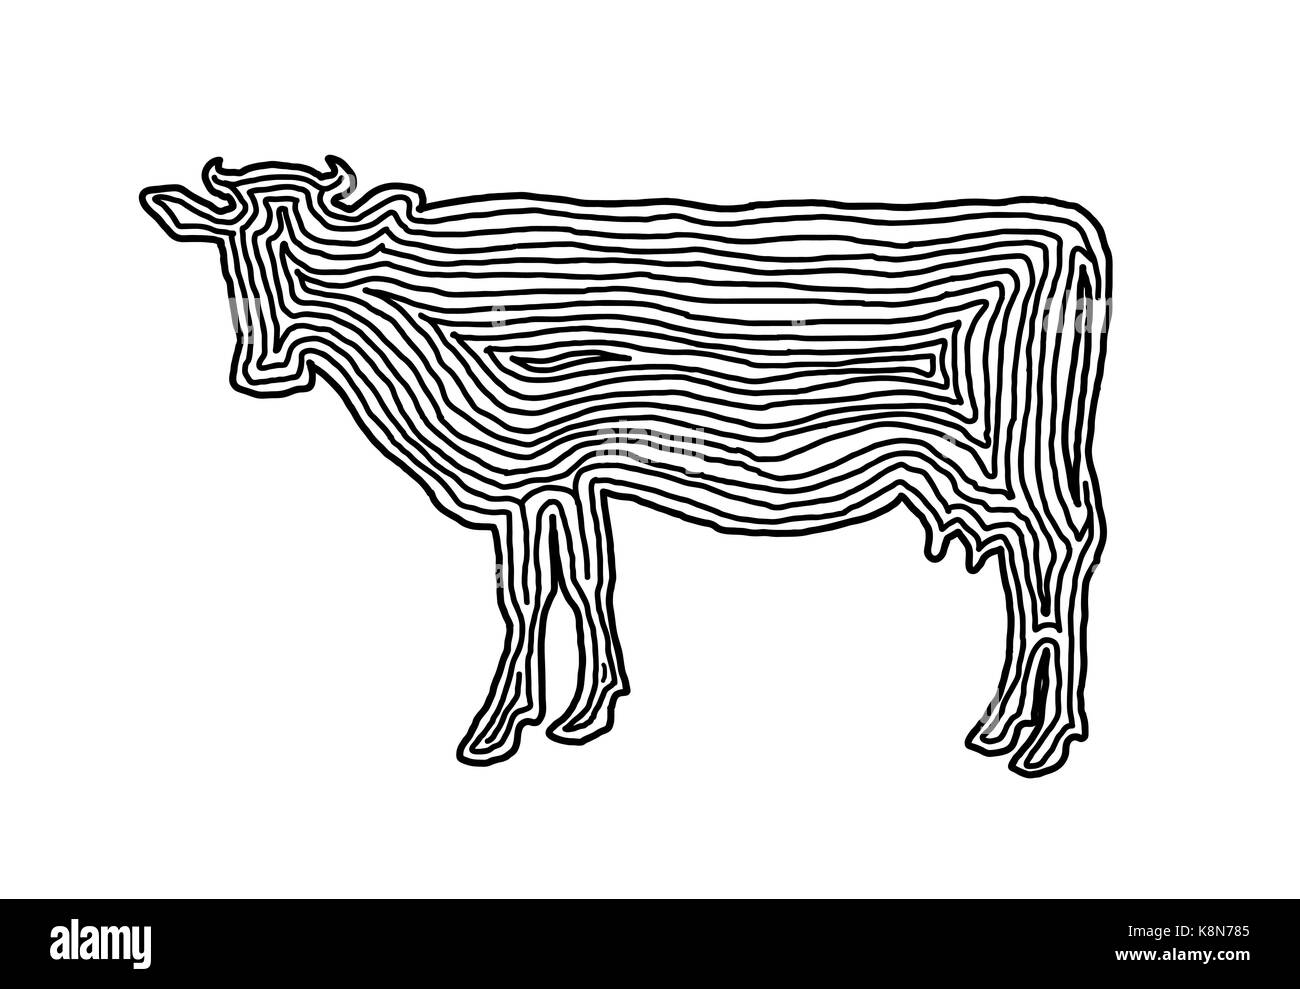 A cow illustration icon in black offset line. Fingerprint style for logo or background design. Stock Vector